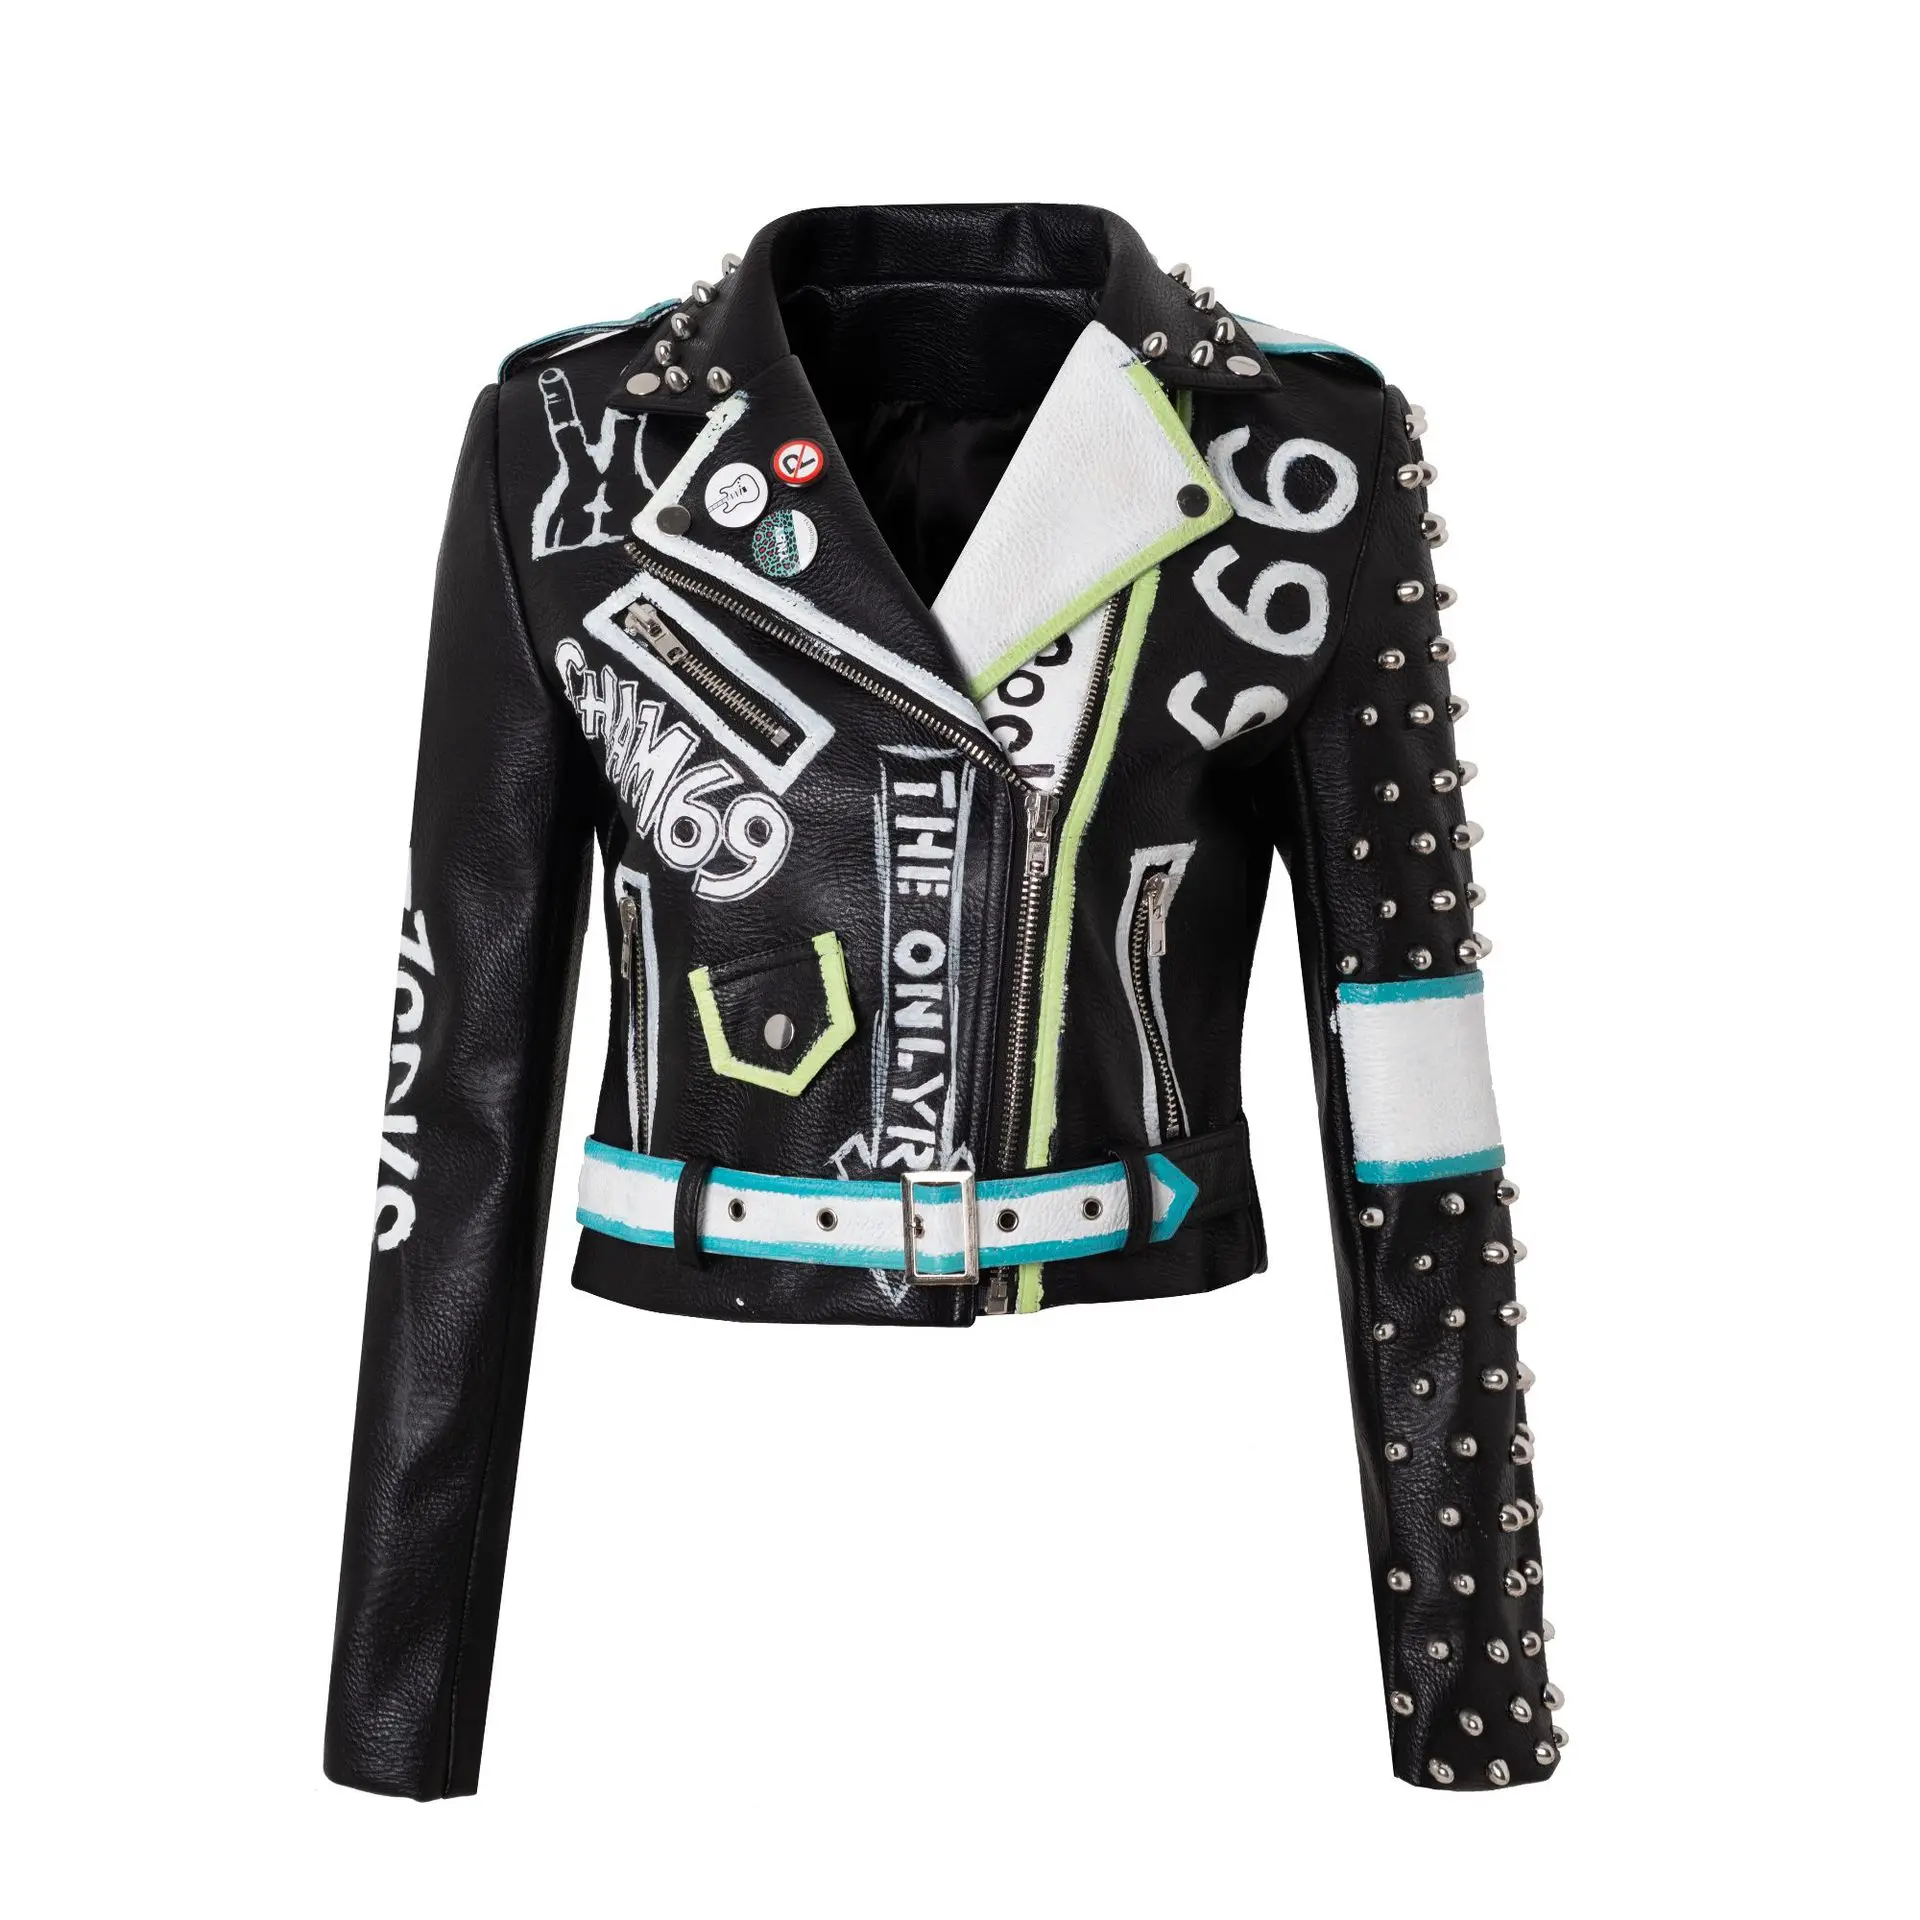 Spring and autumn new punk style lapel women's pu motorcycle clothing rivet short jacket enlarge